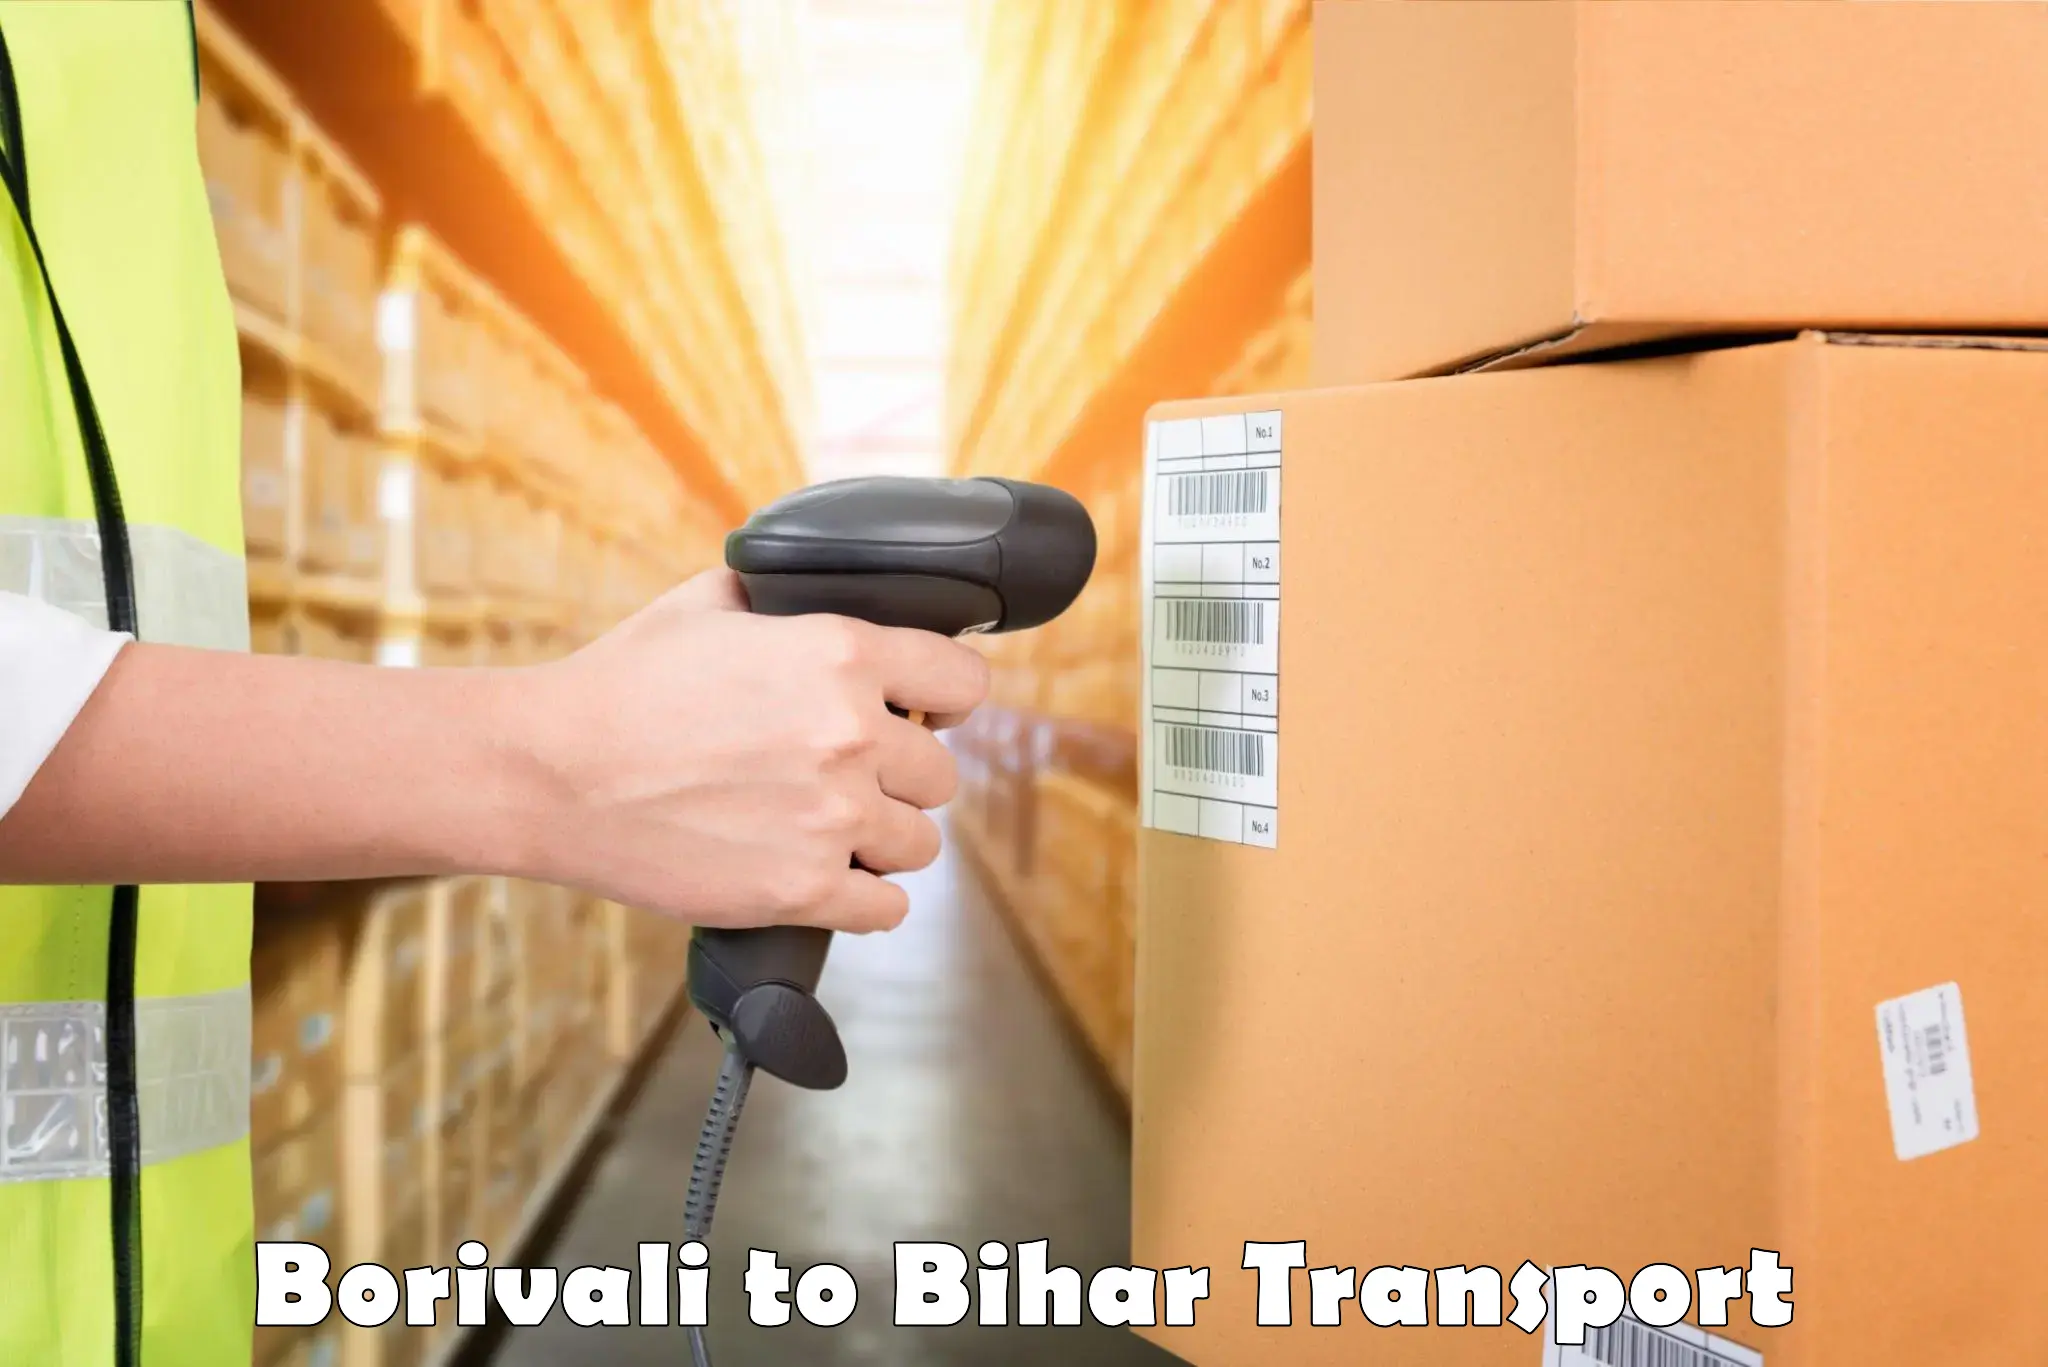 Container transport service Borivali to Bhorey